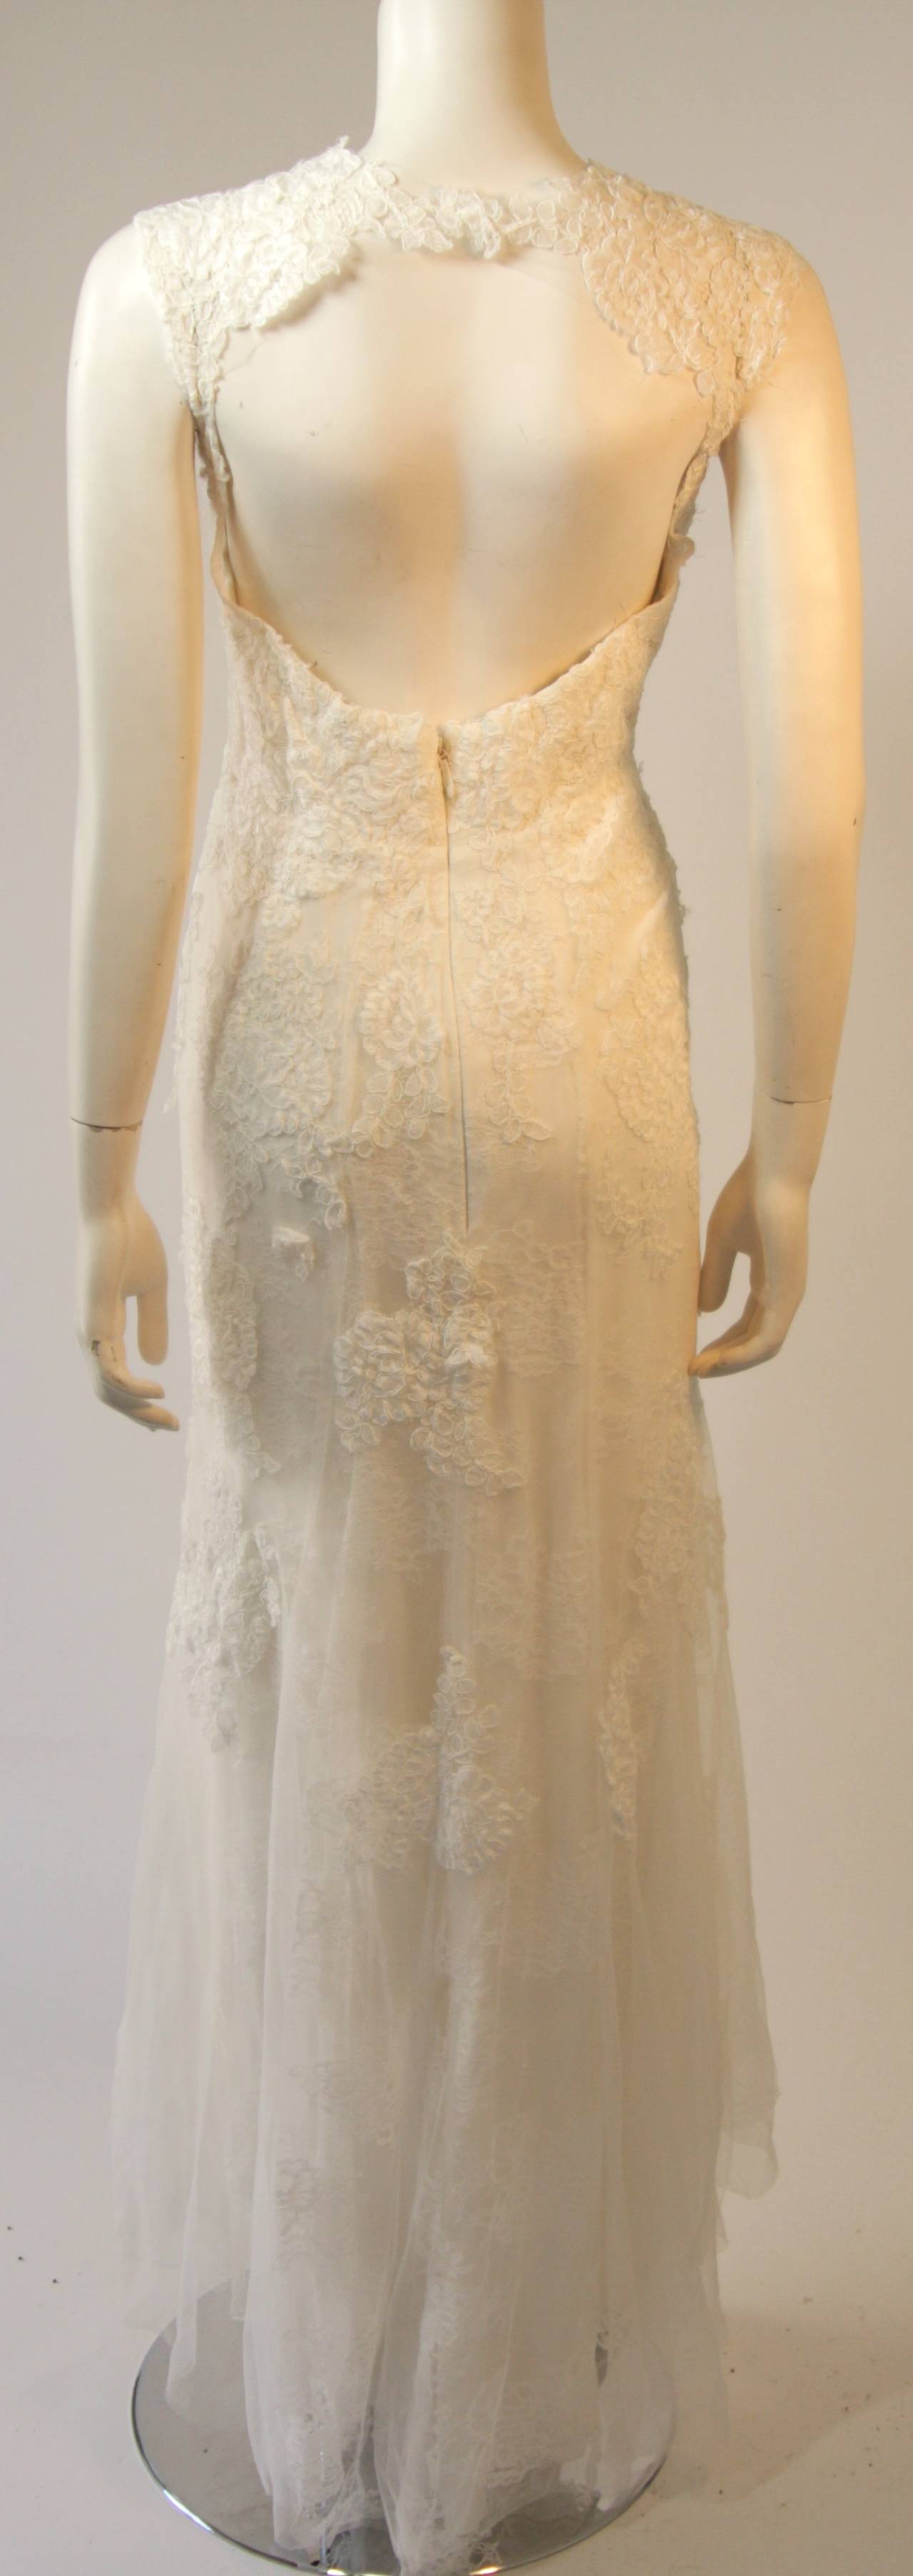 Monique Lhuillier Wedding Gown with Veil 2